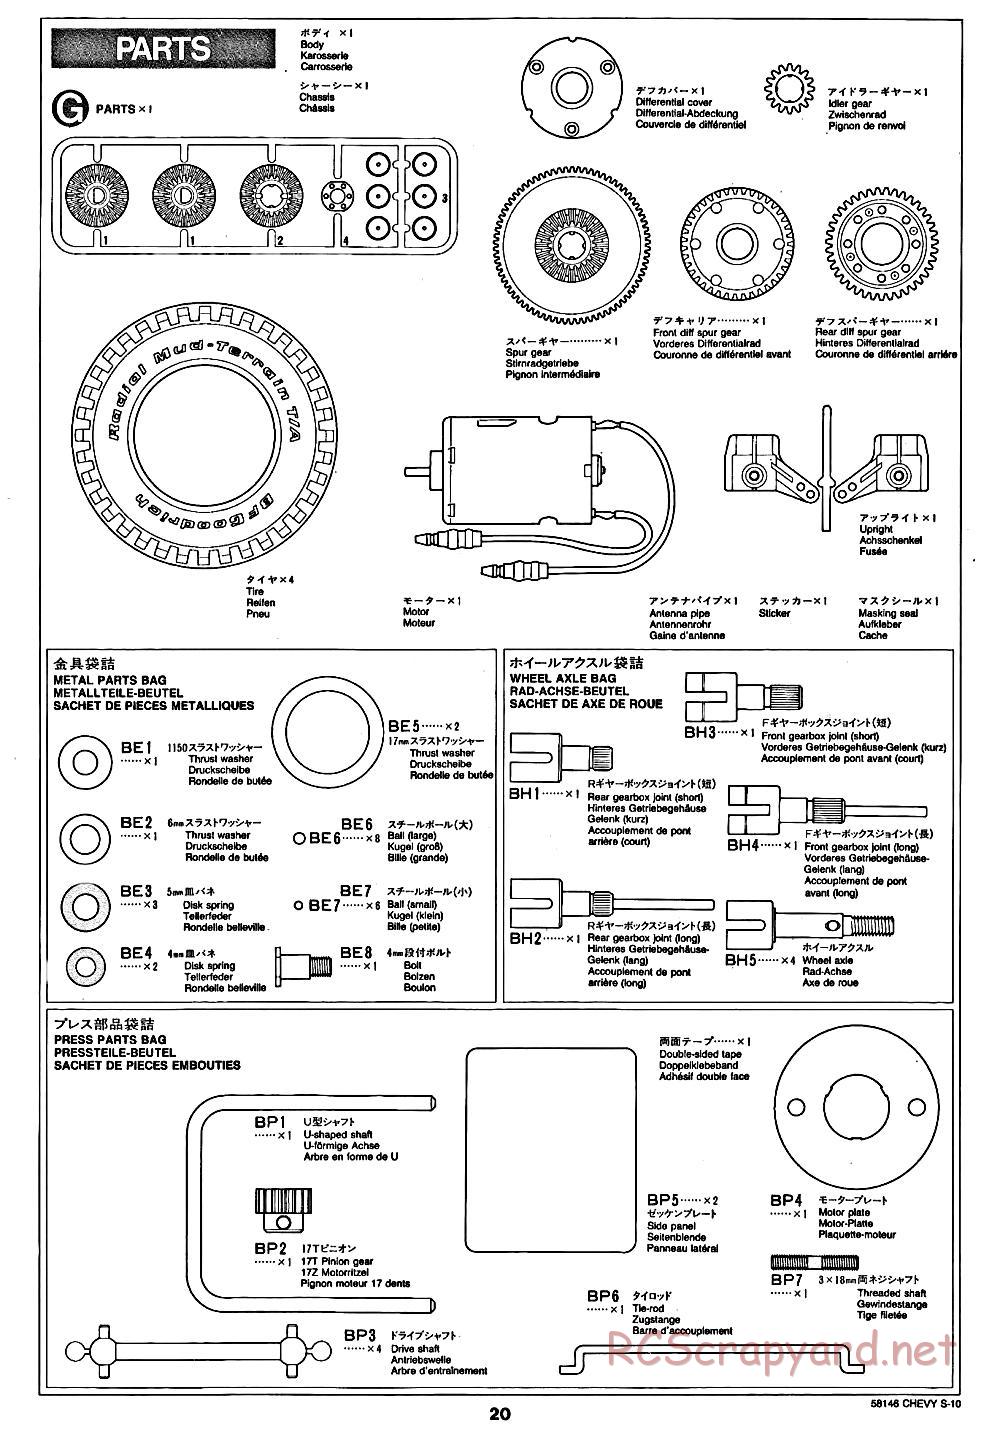 Tamiya - Chevy S-10 Chassis - Manual - Page 20